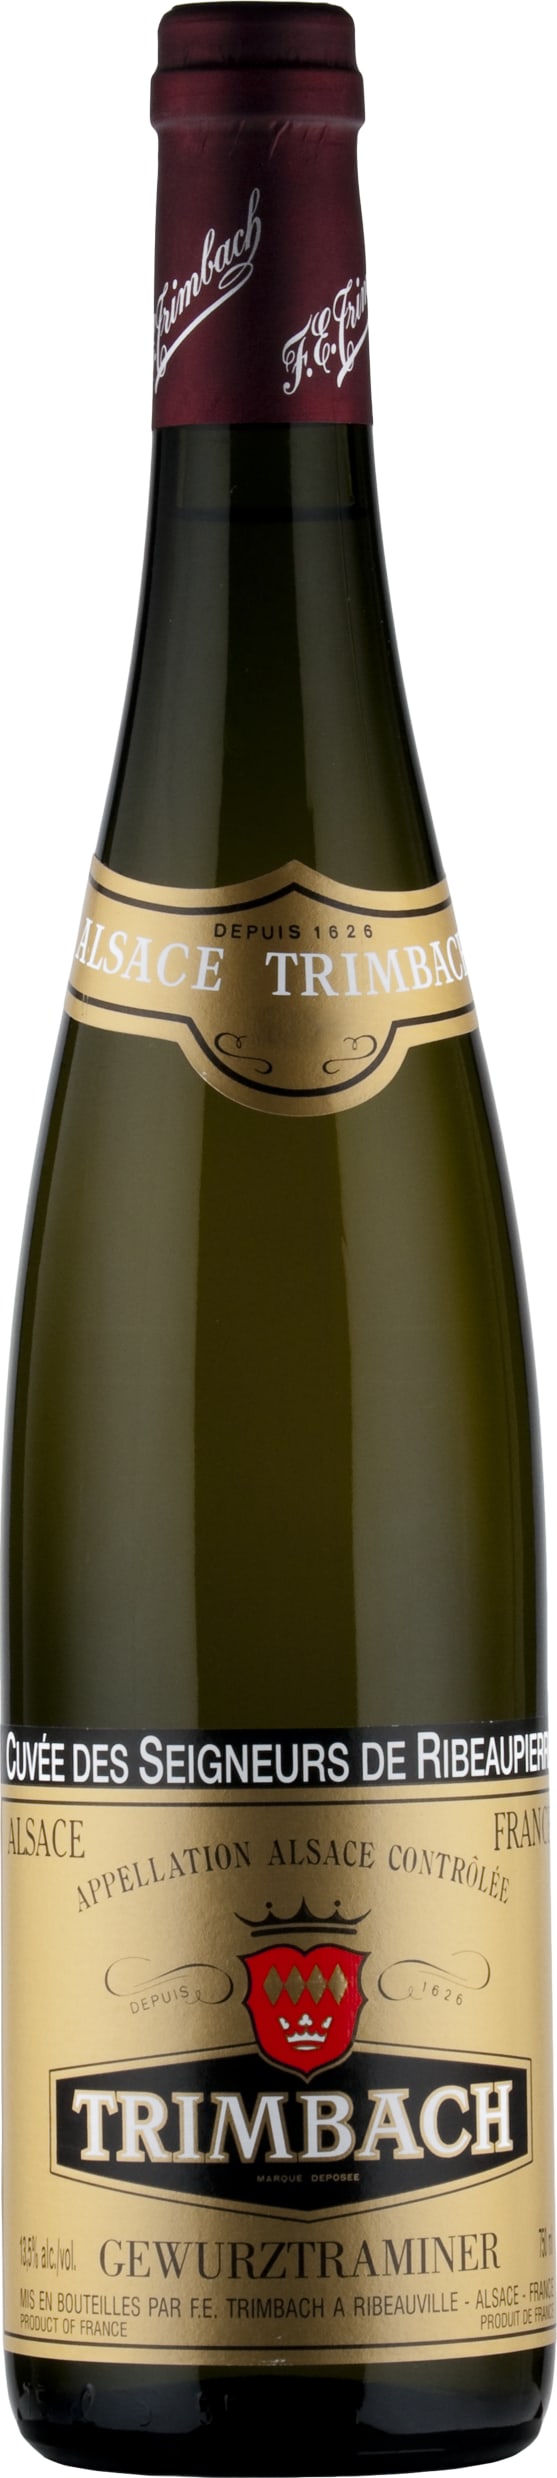 Trimbach Gewurztraminer Cuvee des Seigneurs de Ribeaupierre 2015 6x75cl - Just Wines 